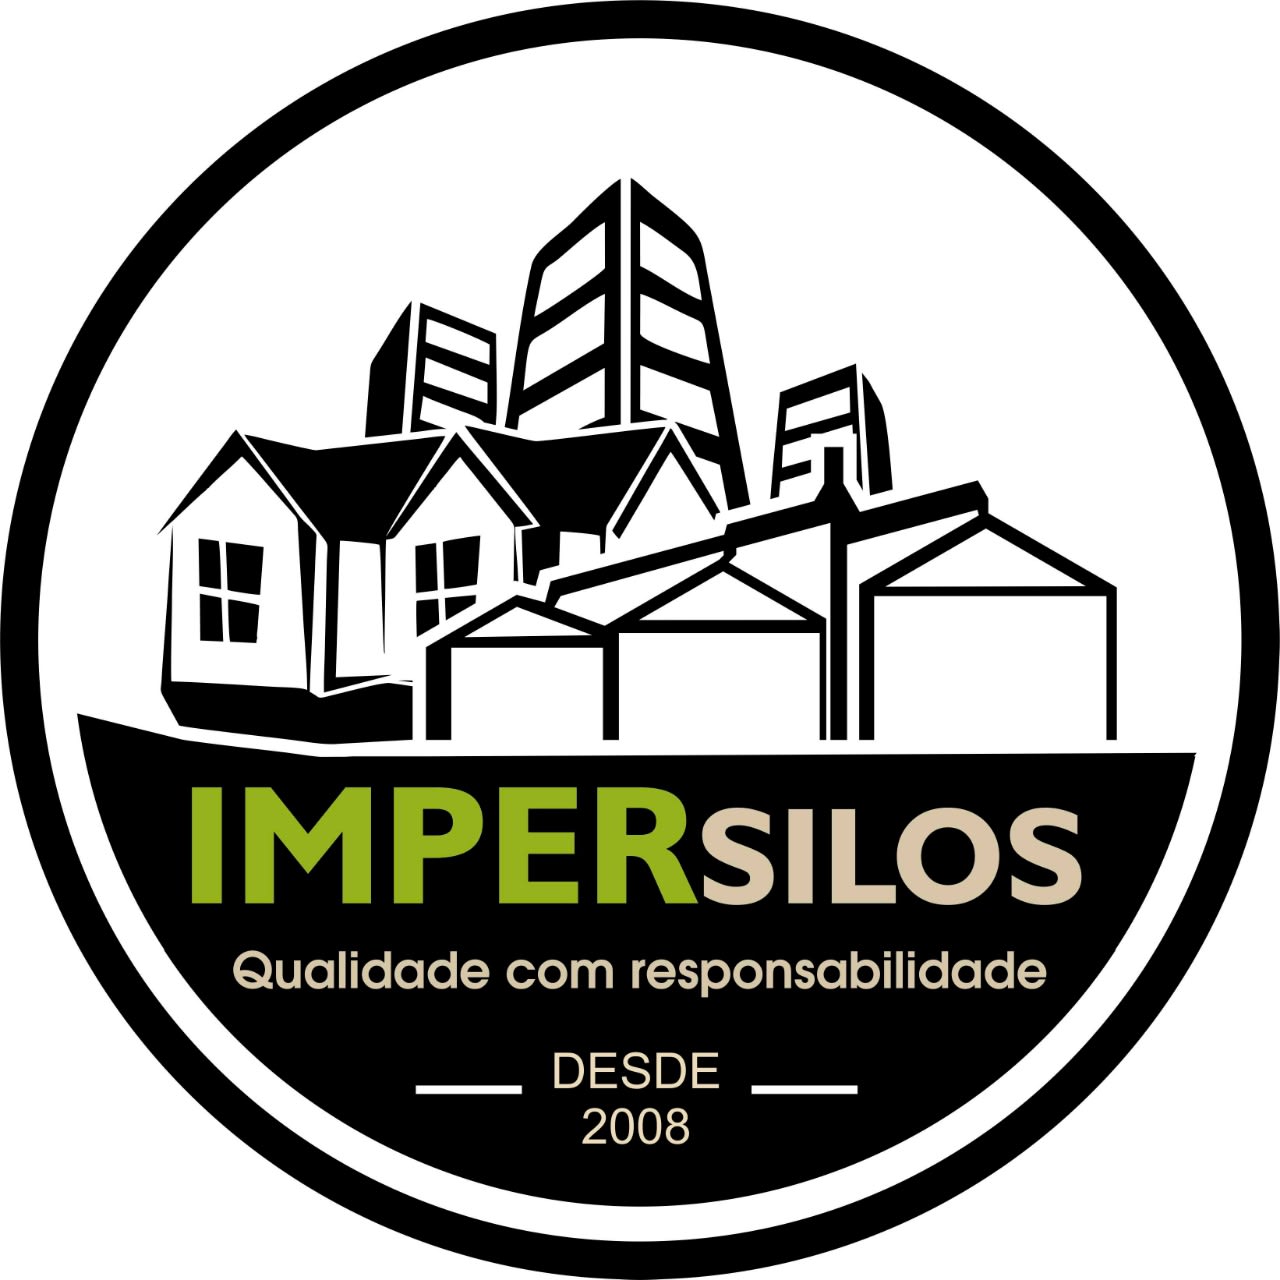 ImperSilos